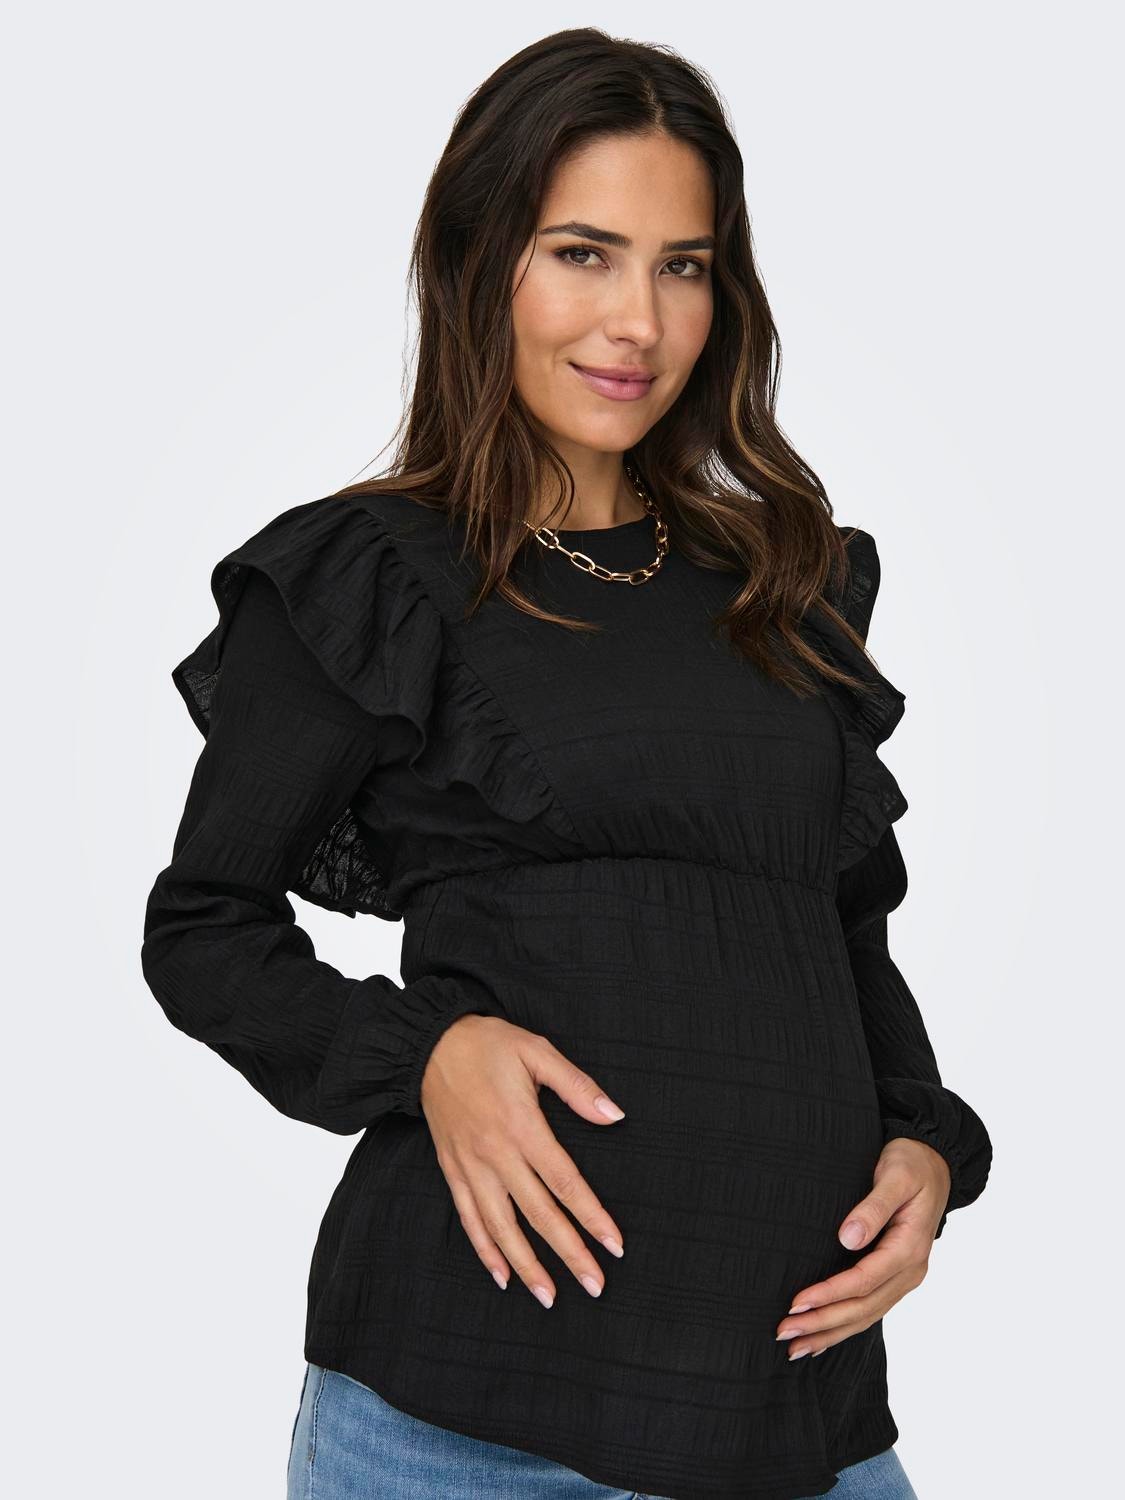 ONLY Normal geschnitten Rundhals Maternity Elastische Bündchen Voluminöser Armschnitt Top -Black - 15326975